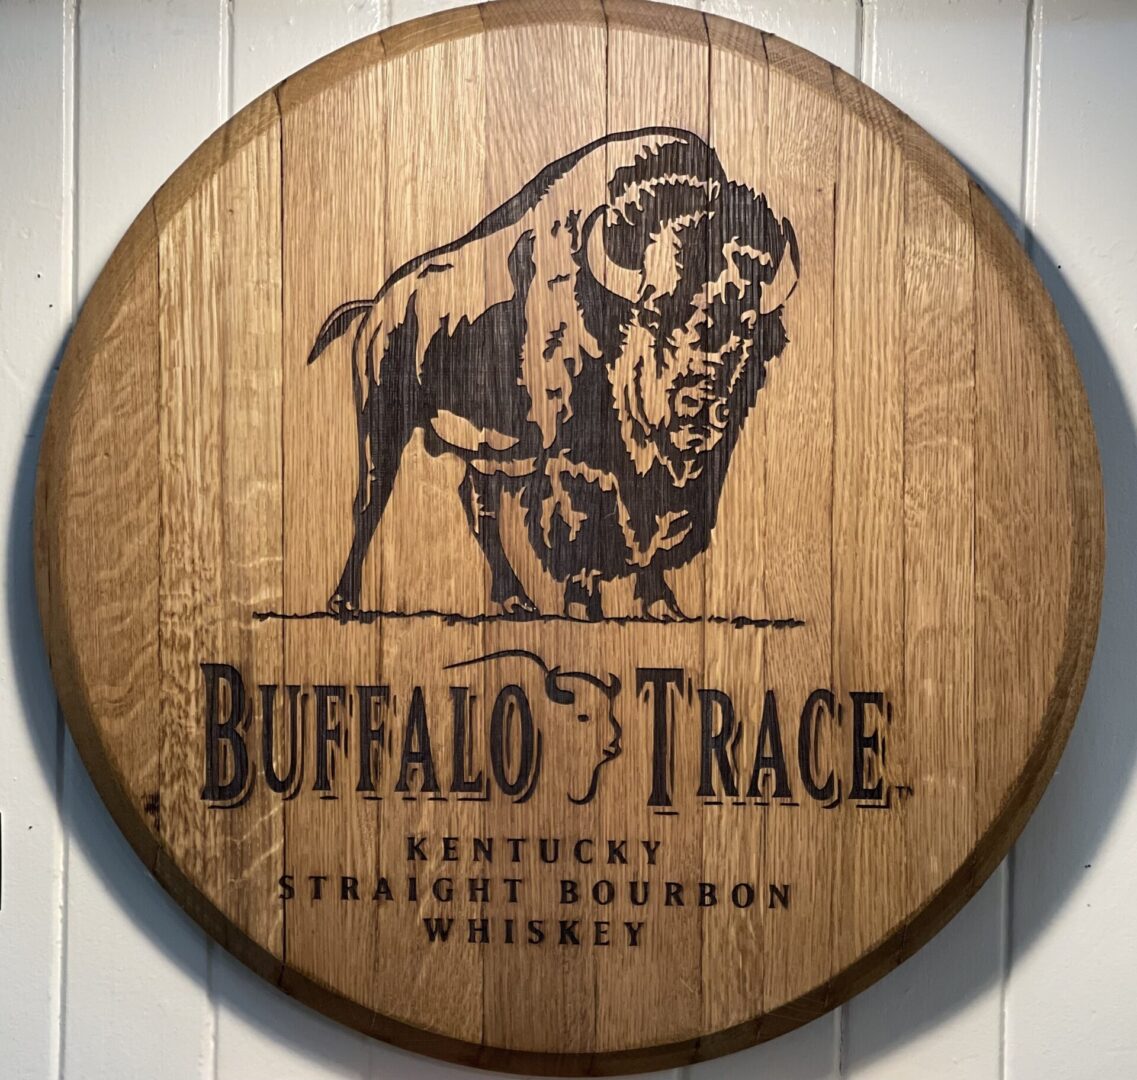 Buffalo trace kentucky bourbon barrel sign.